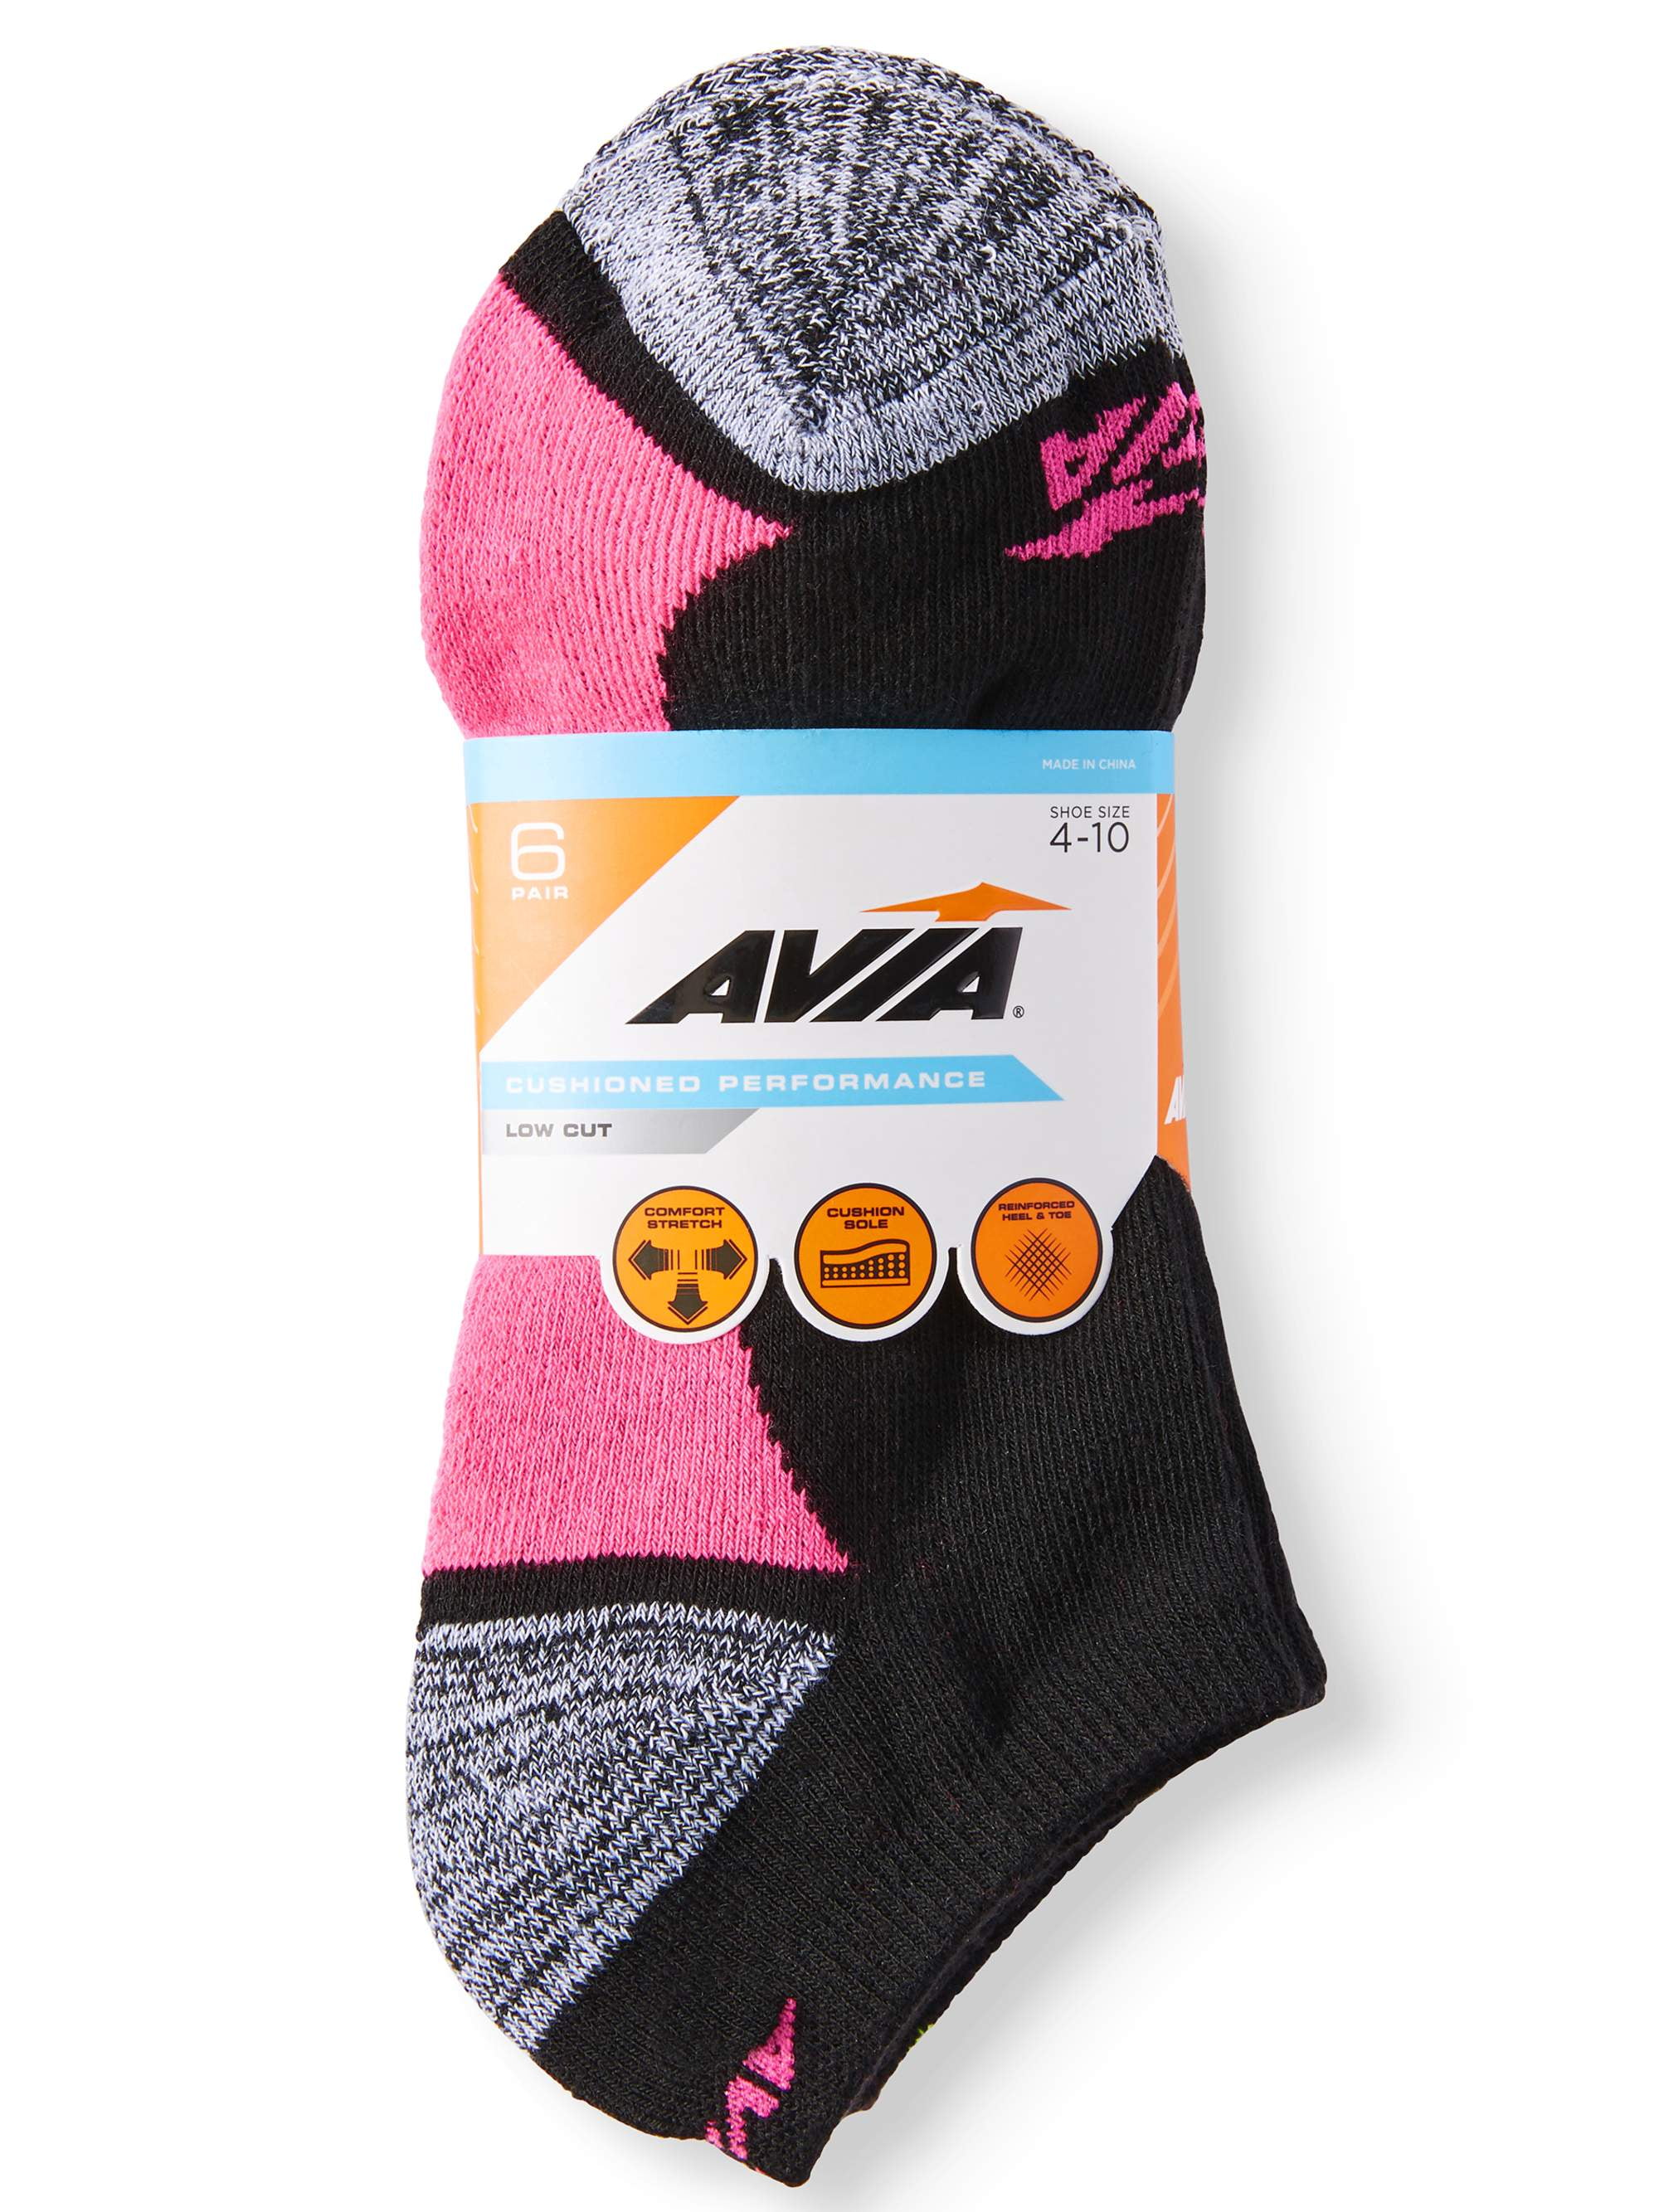 Ladies Cushioned Performance Low Cut Socks, 6 Pack - Walmart.com